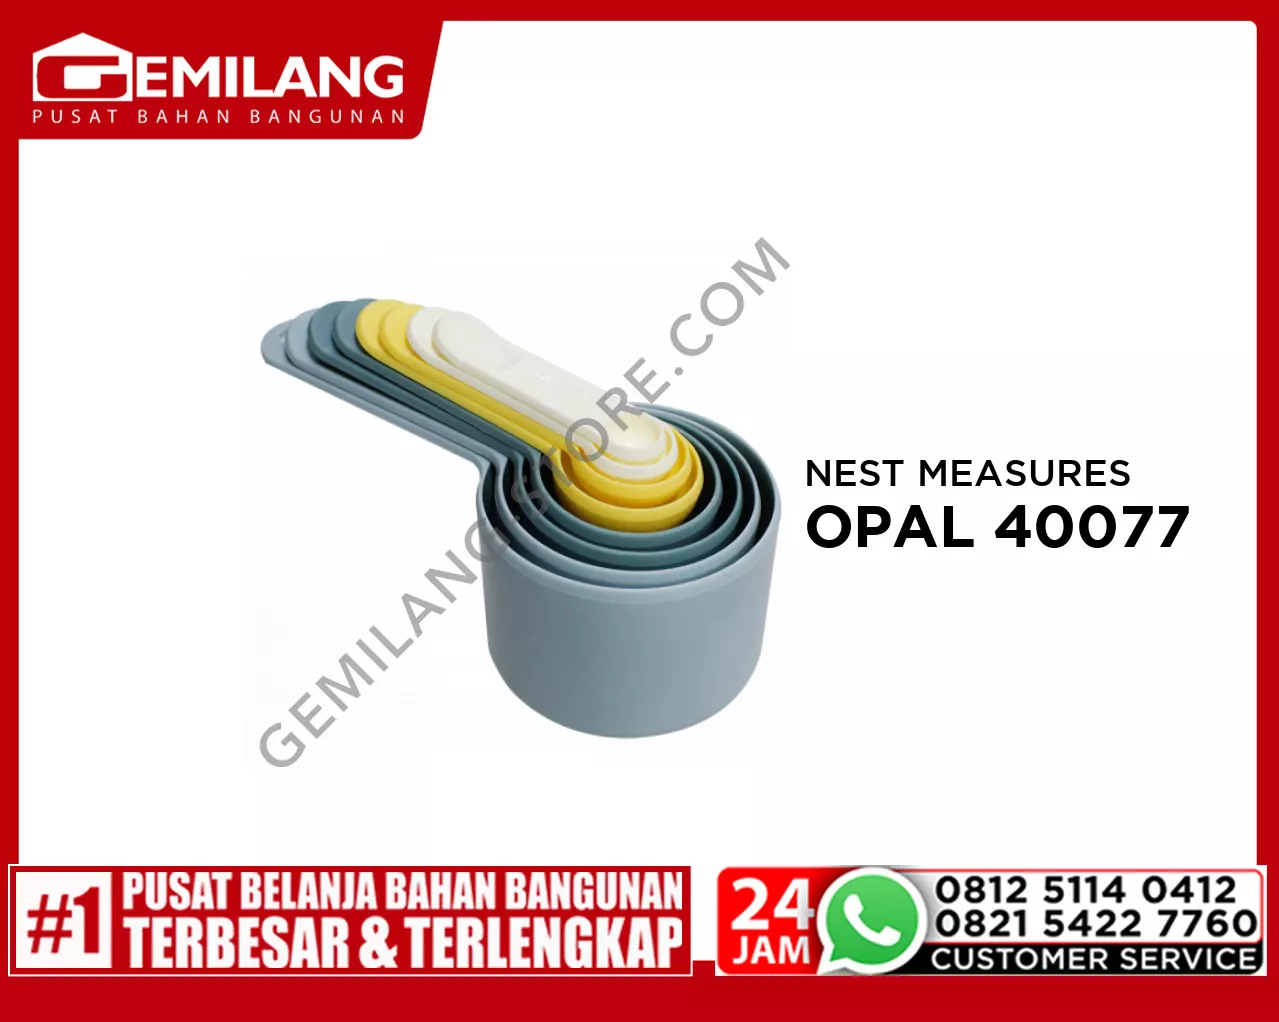 NEST MEASURES OPAL 40077